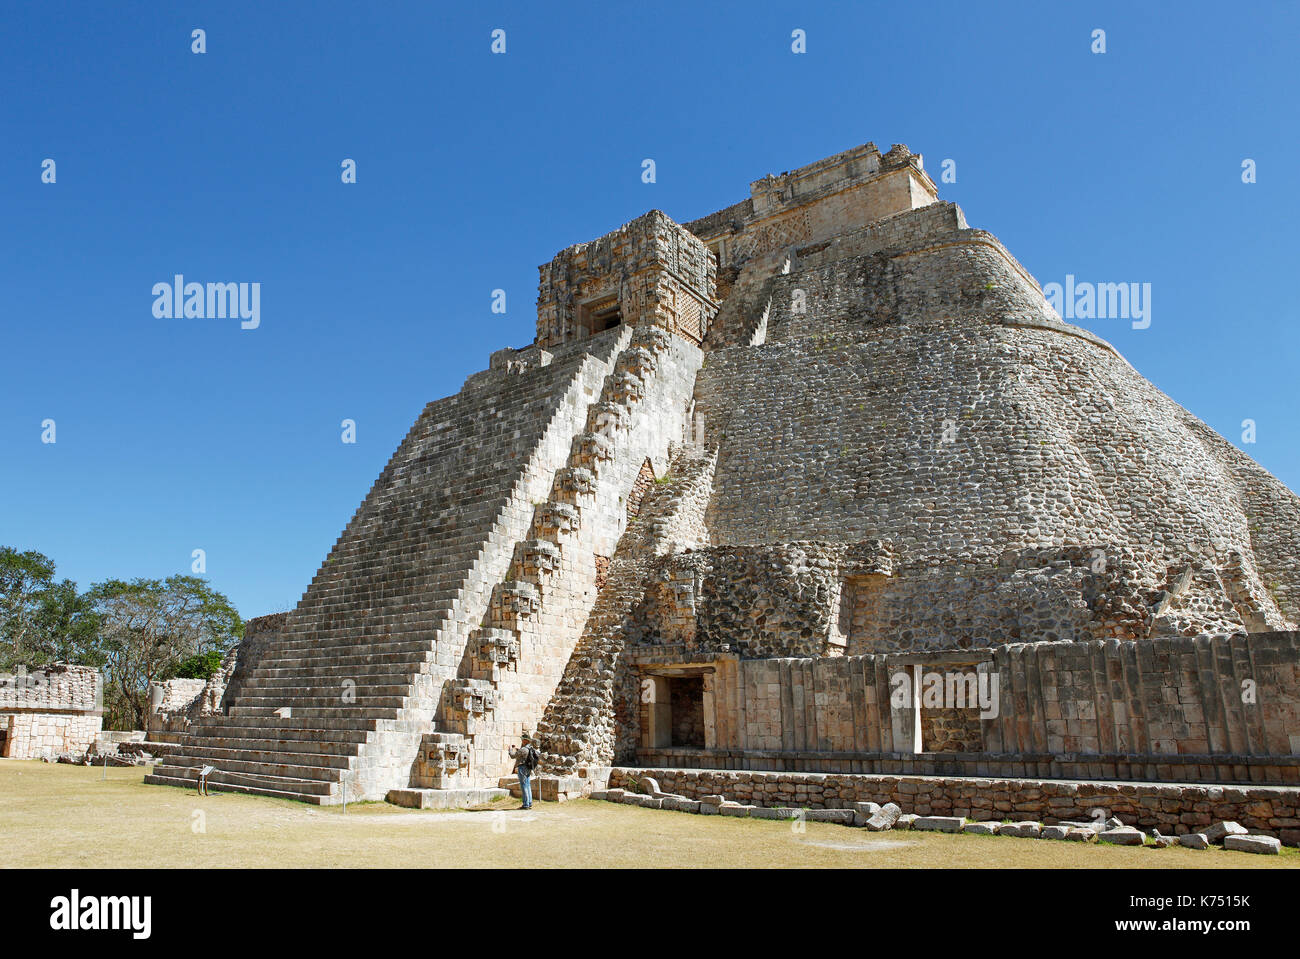 Adivino pyramid or pyramid of the fortune teller, Mayan site, Uxmal, Yucatán, Mexico Stock Photo